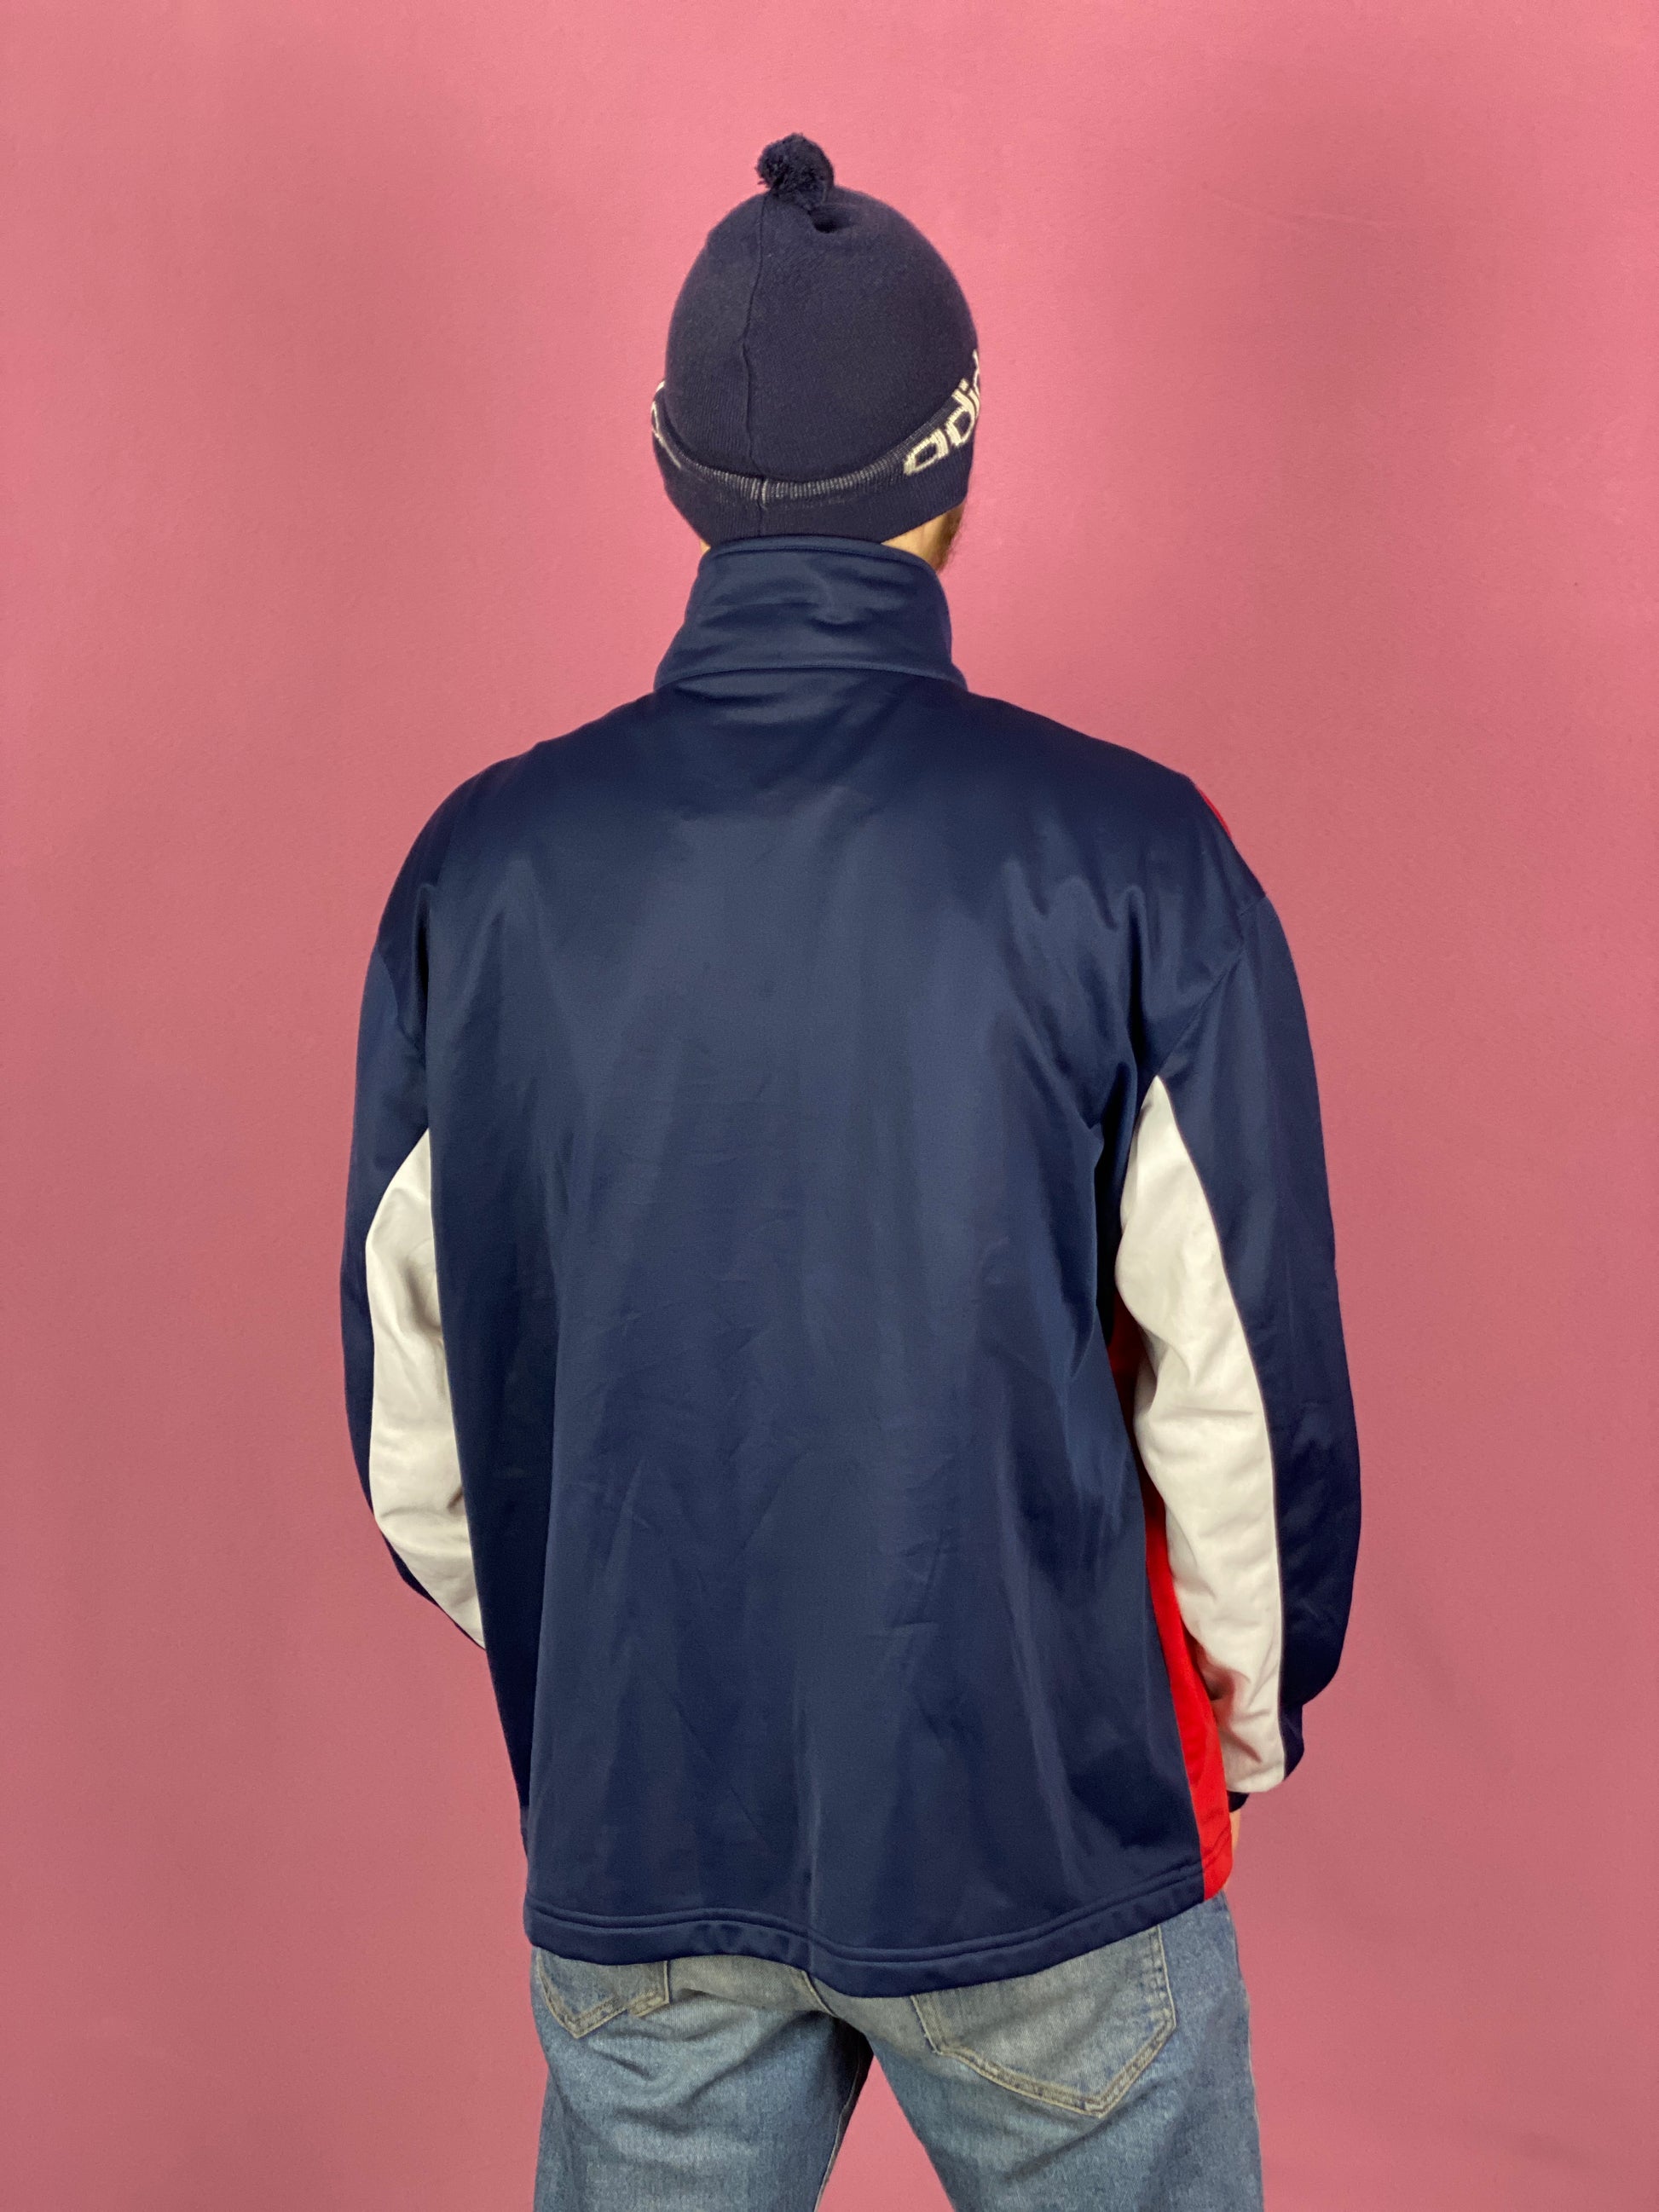 90s Ferotti Vintage Men's Track Jacket - XL Red & Black Polyester